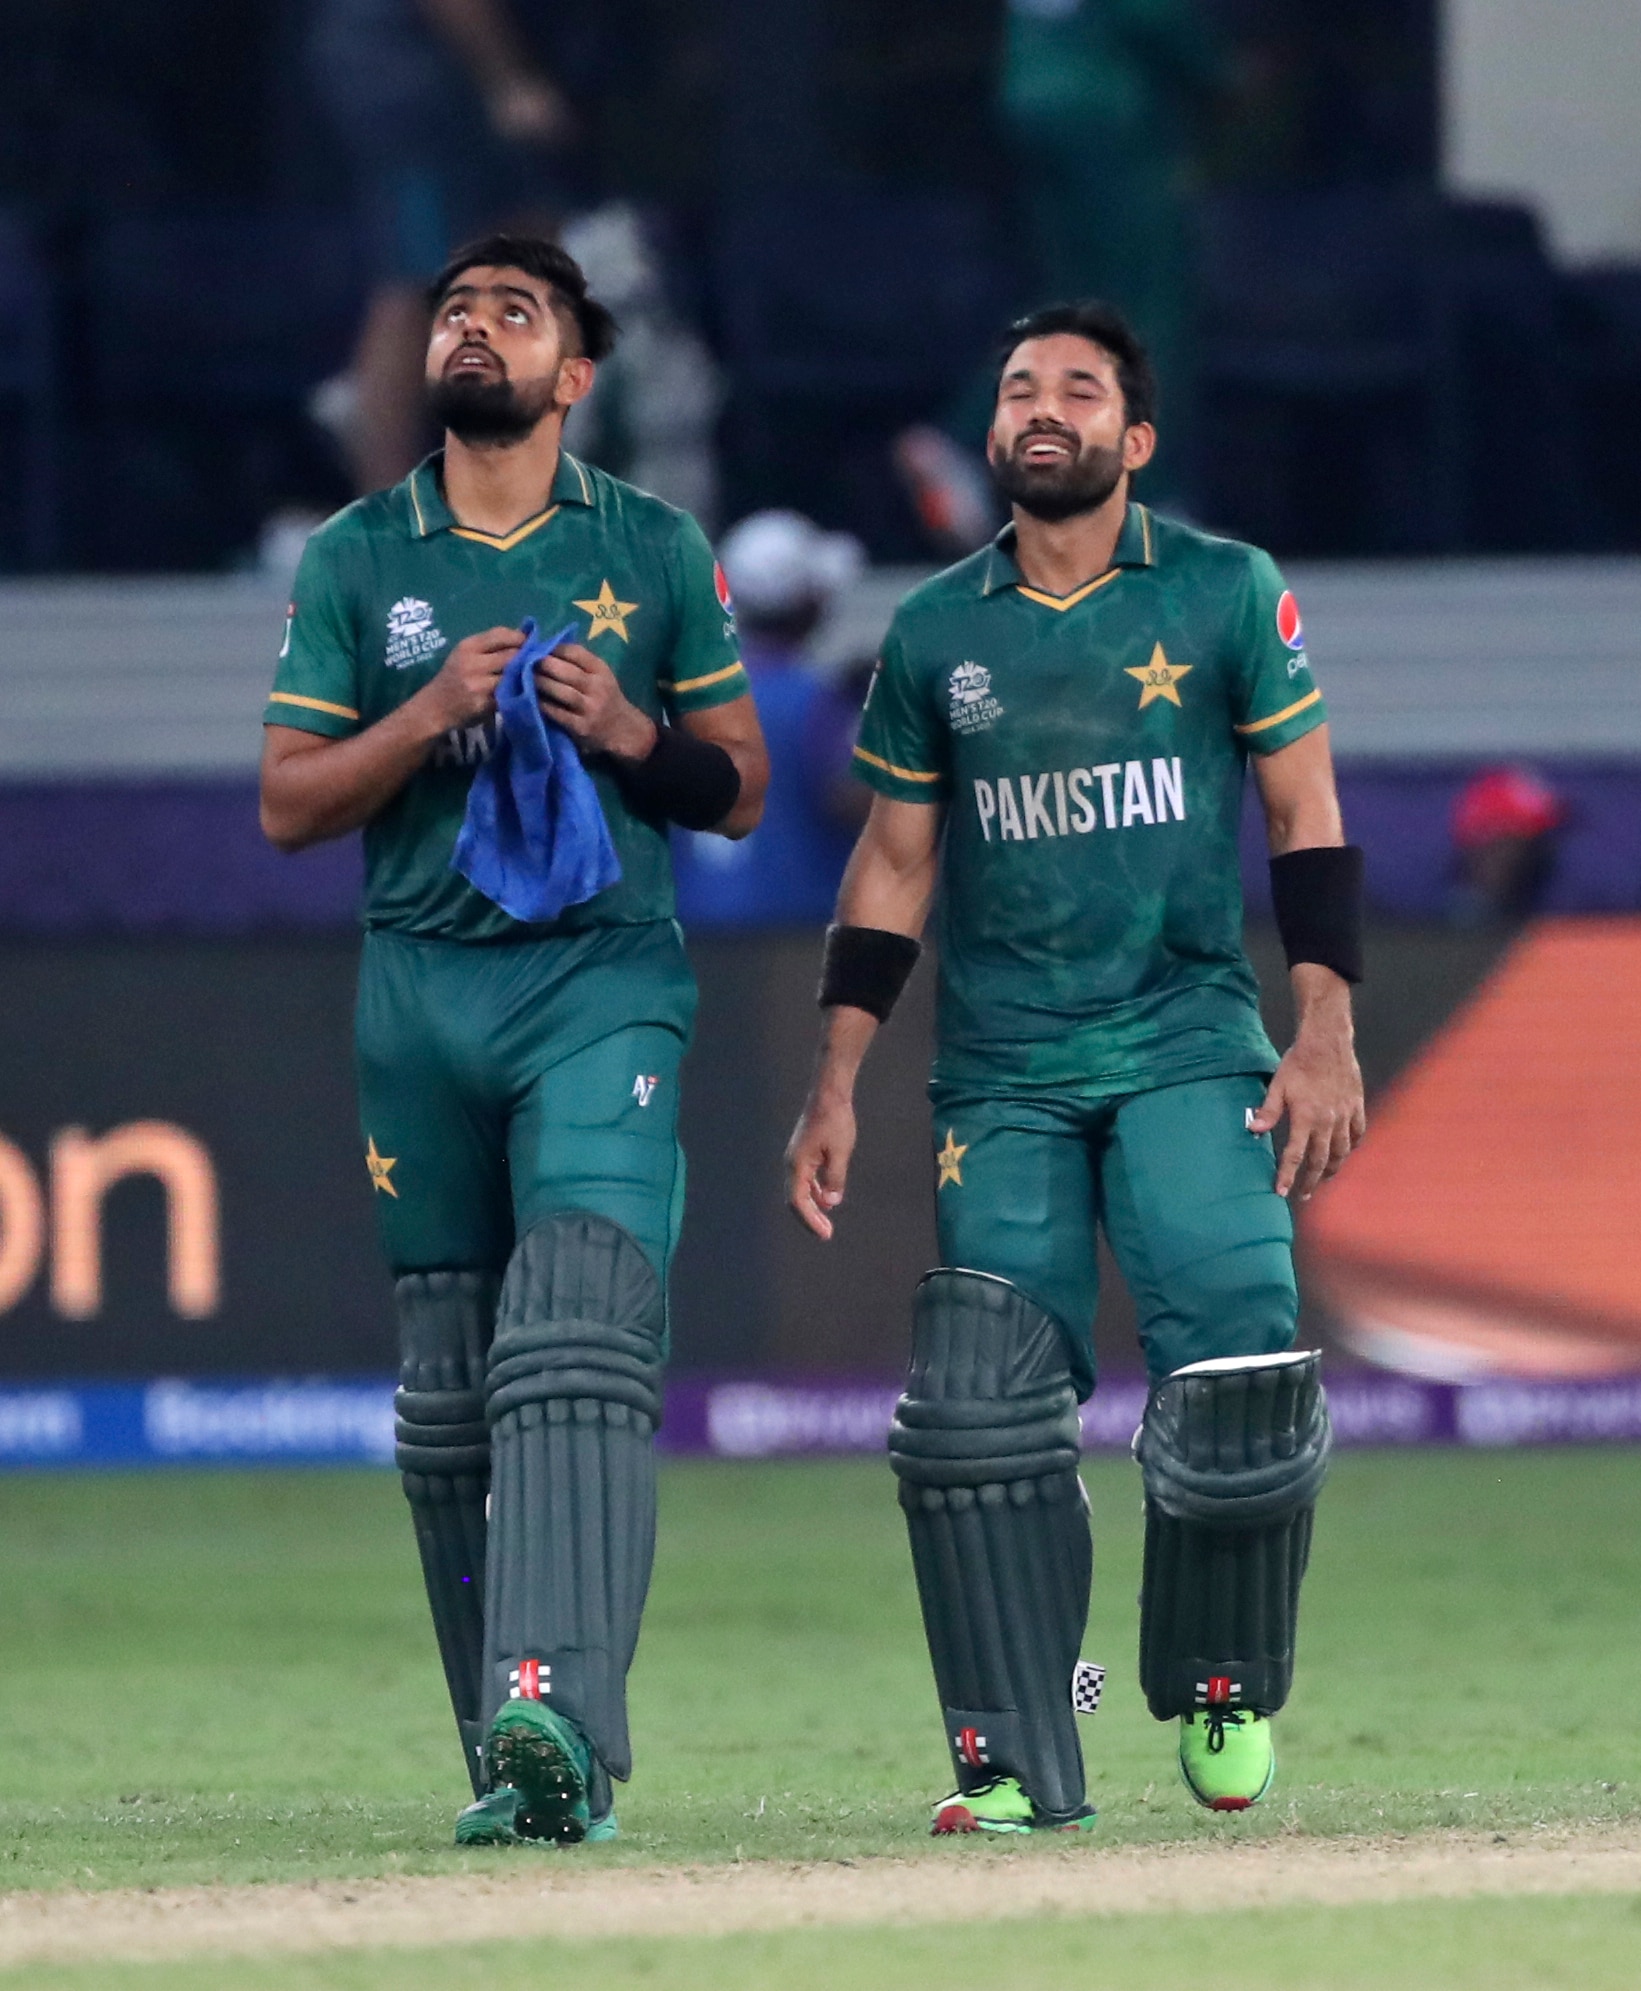 Pakistan's cricket captain Babar Azam, left, and Mohammad Rizwan celebrate after their team won the Cricket Twenty20 World Cup match between India and Pakistan in Dubai, UAE, Sunday, Oct. 24, 2021. (AP Photo/Aijaz Rahi)